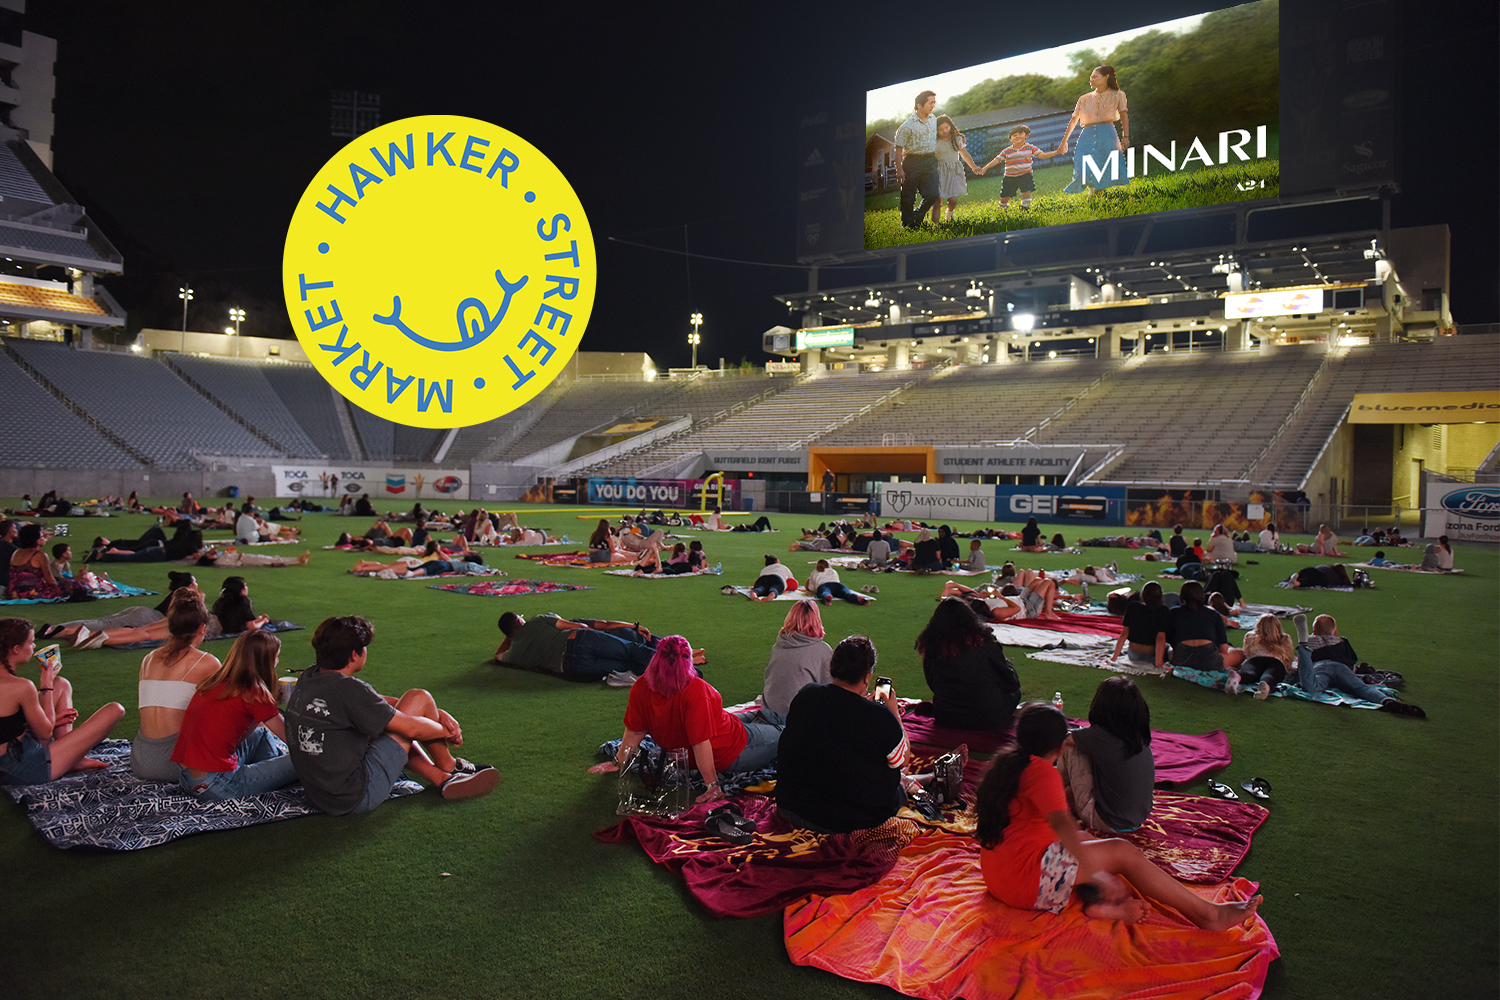 "Minari" plays on the big screen at Sun Devil Stadium. Hawker Street Market logo floats over the image.